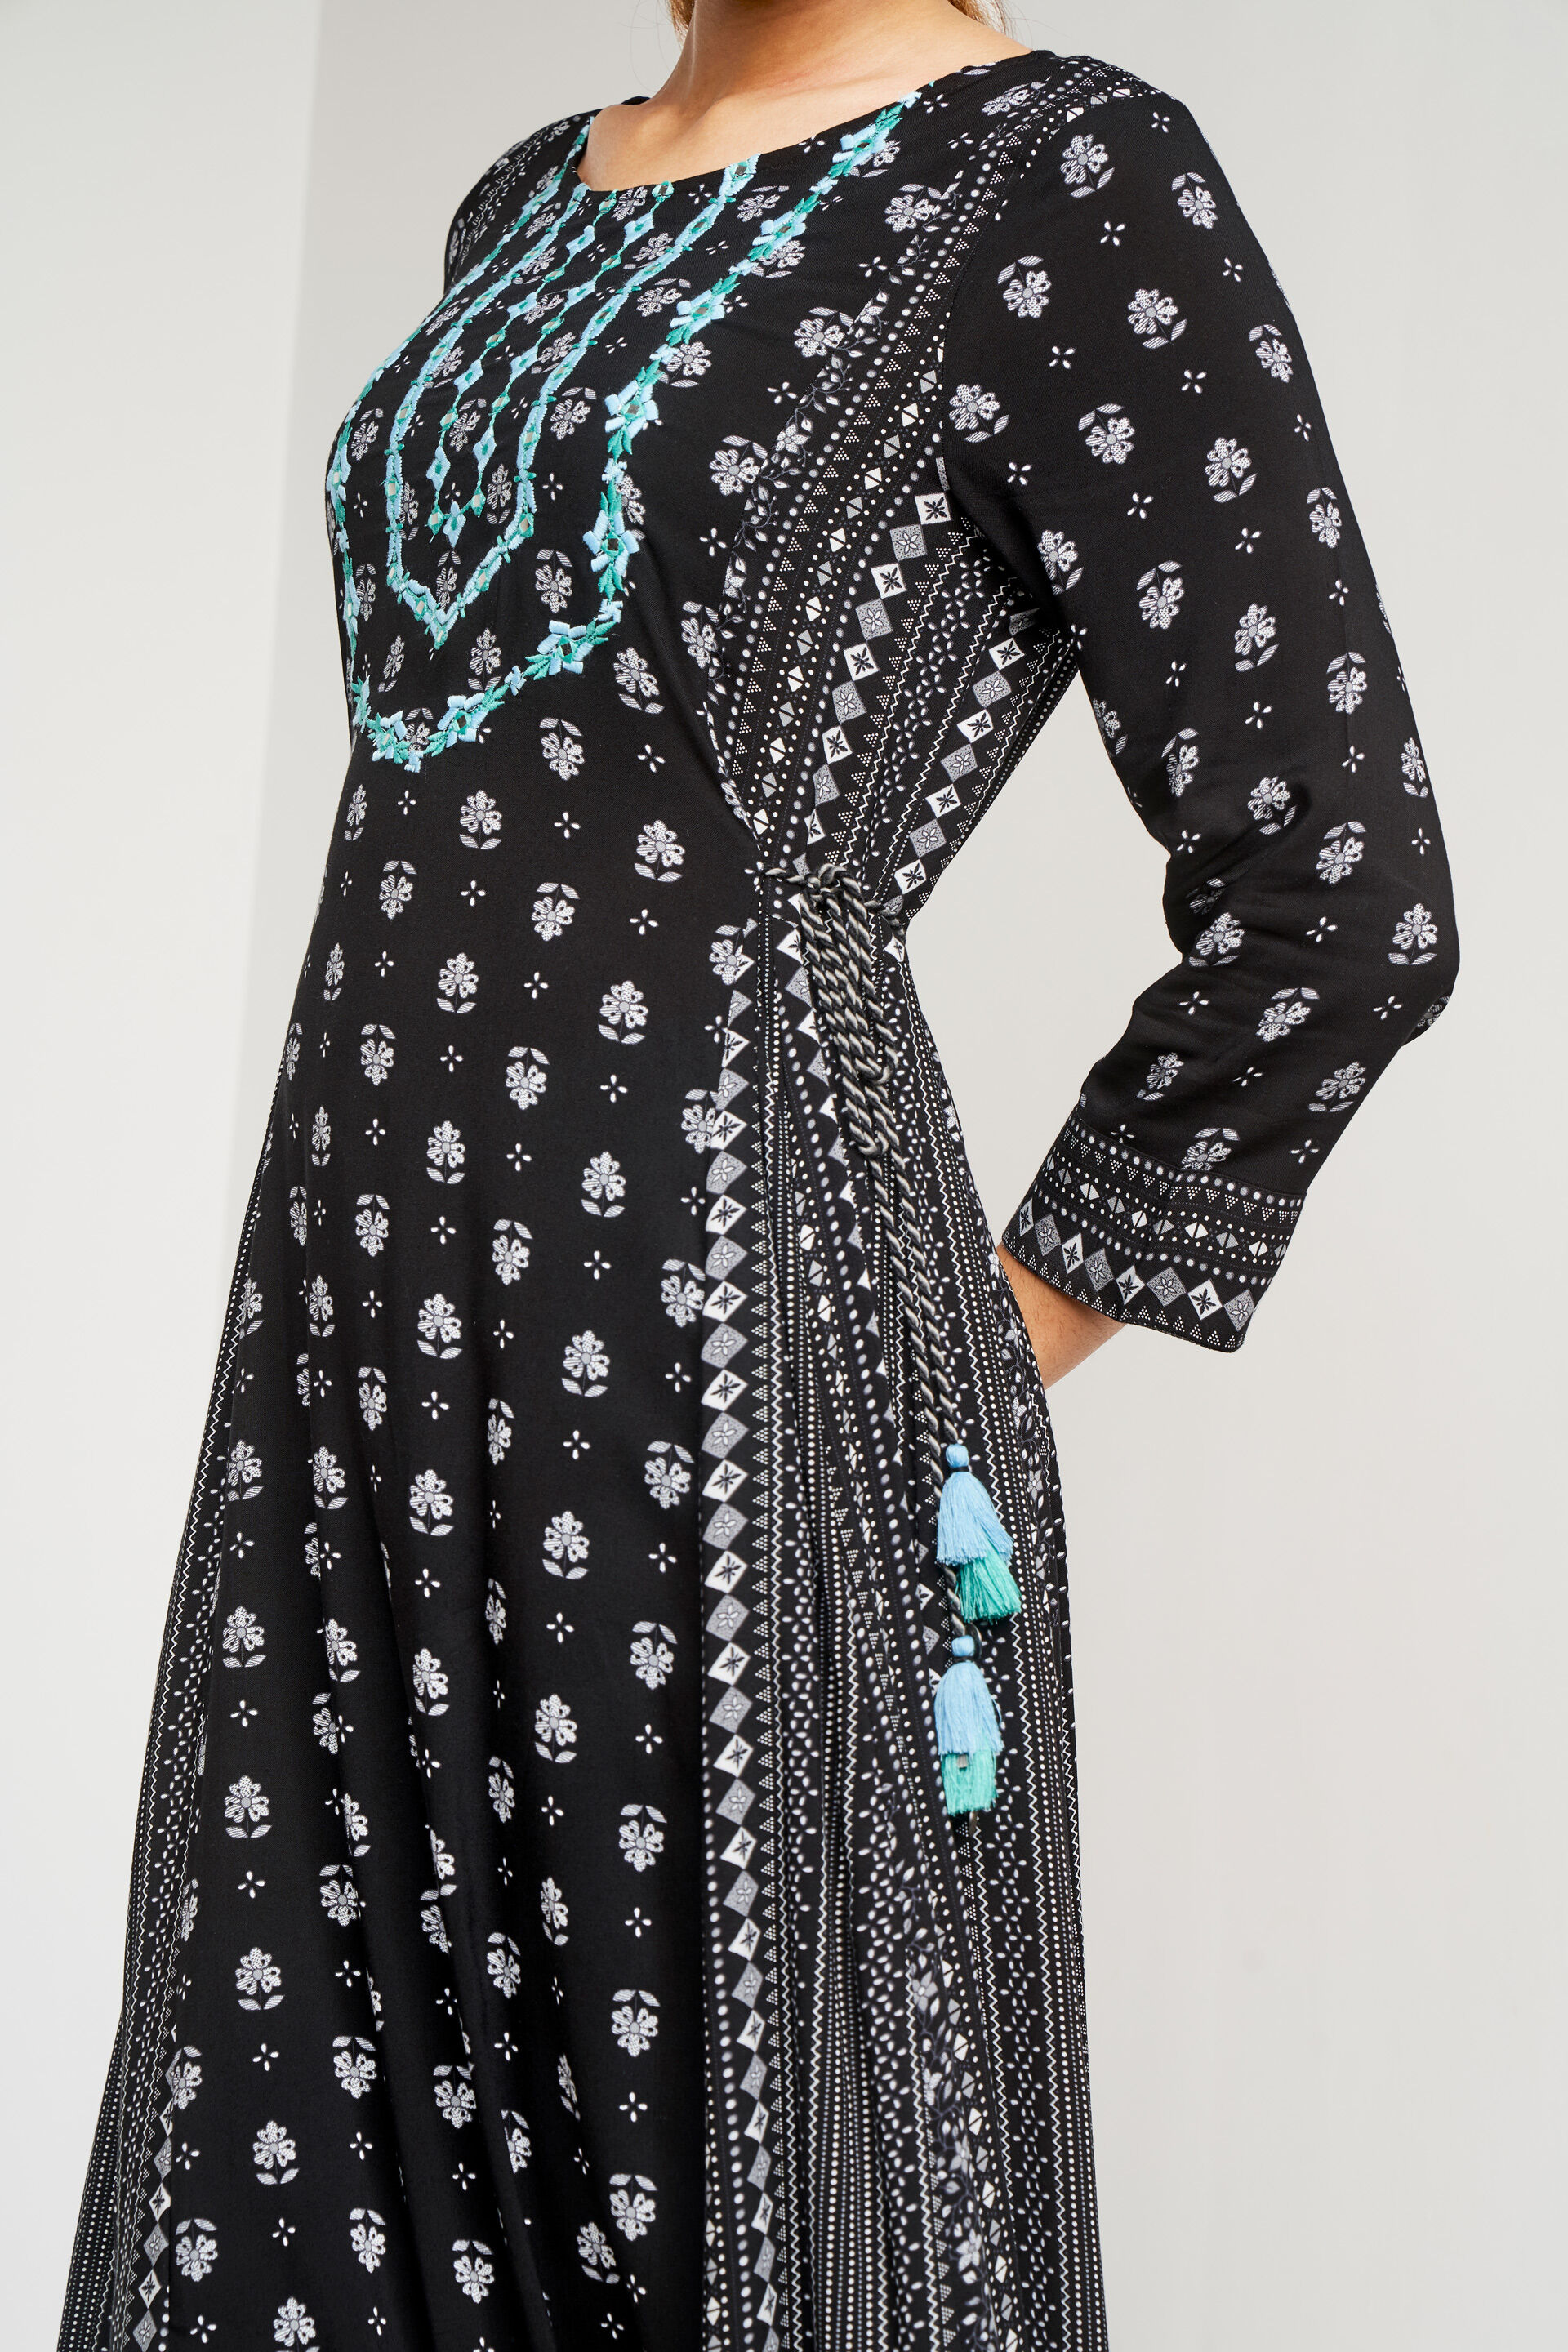 Global Desi Casual Wear Kurti, Size: M at Rs 400/piece in Noida | ID:  2849514907033